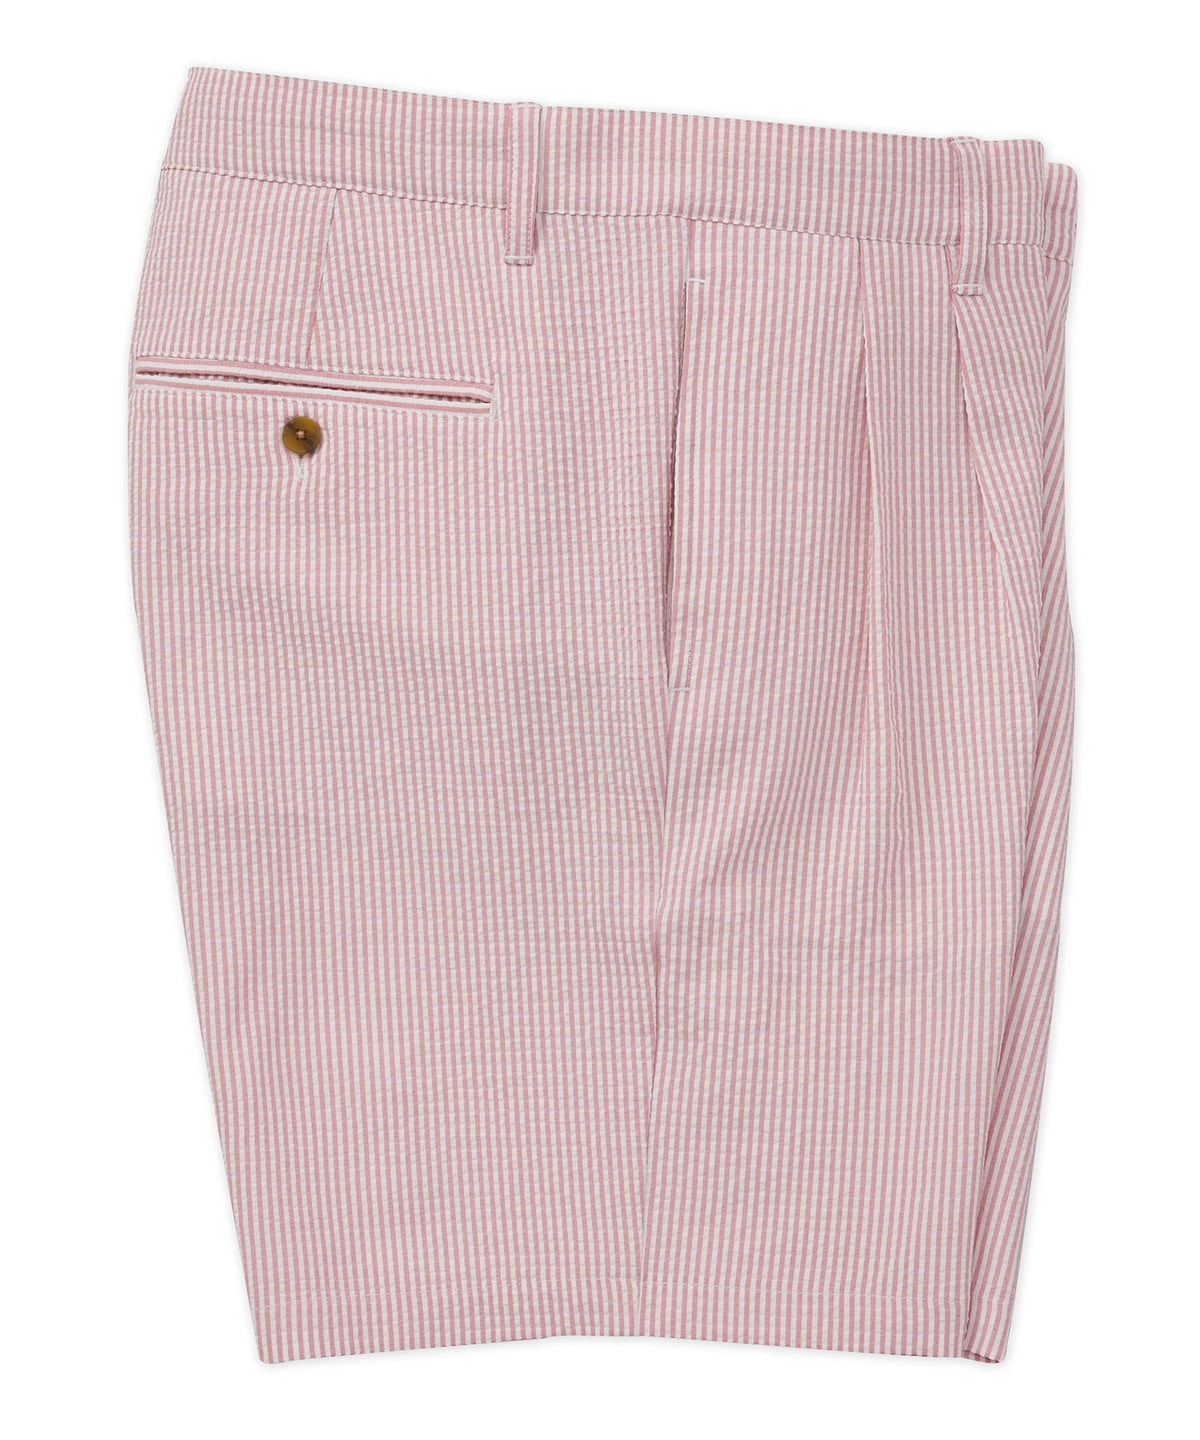 Pantaloncini in seersucker plissettati Fairfield Lifestyle di Westport, Men's Big & Tall